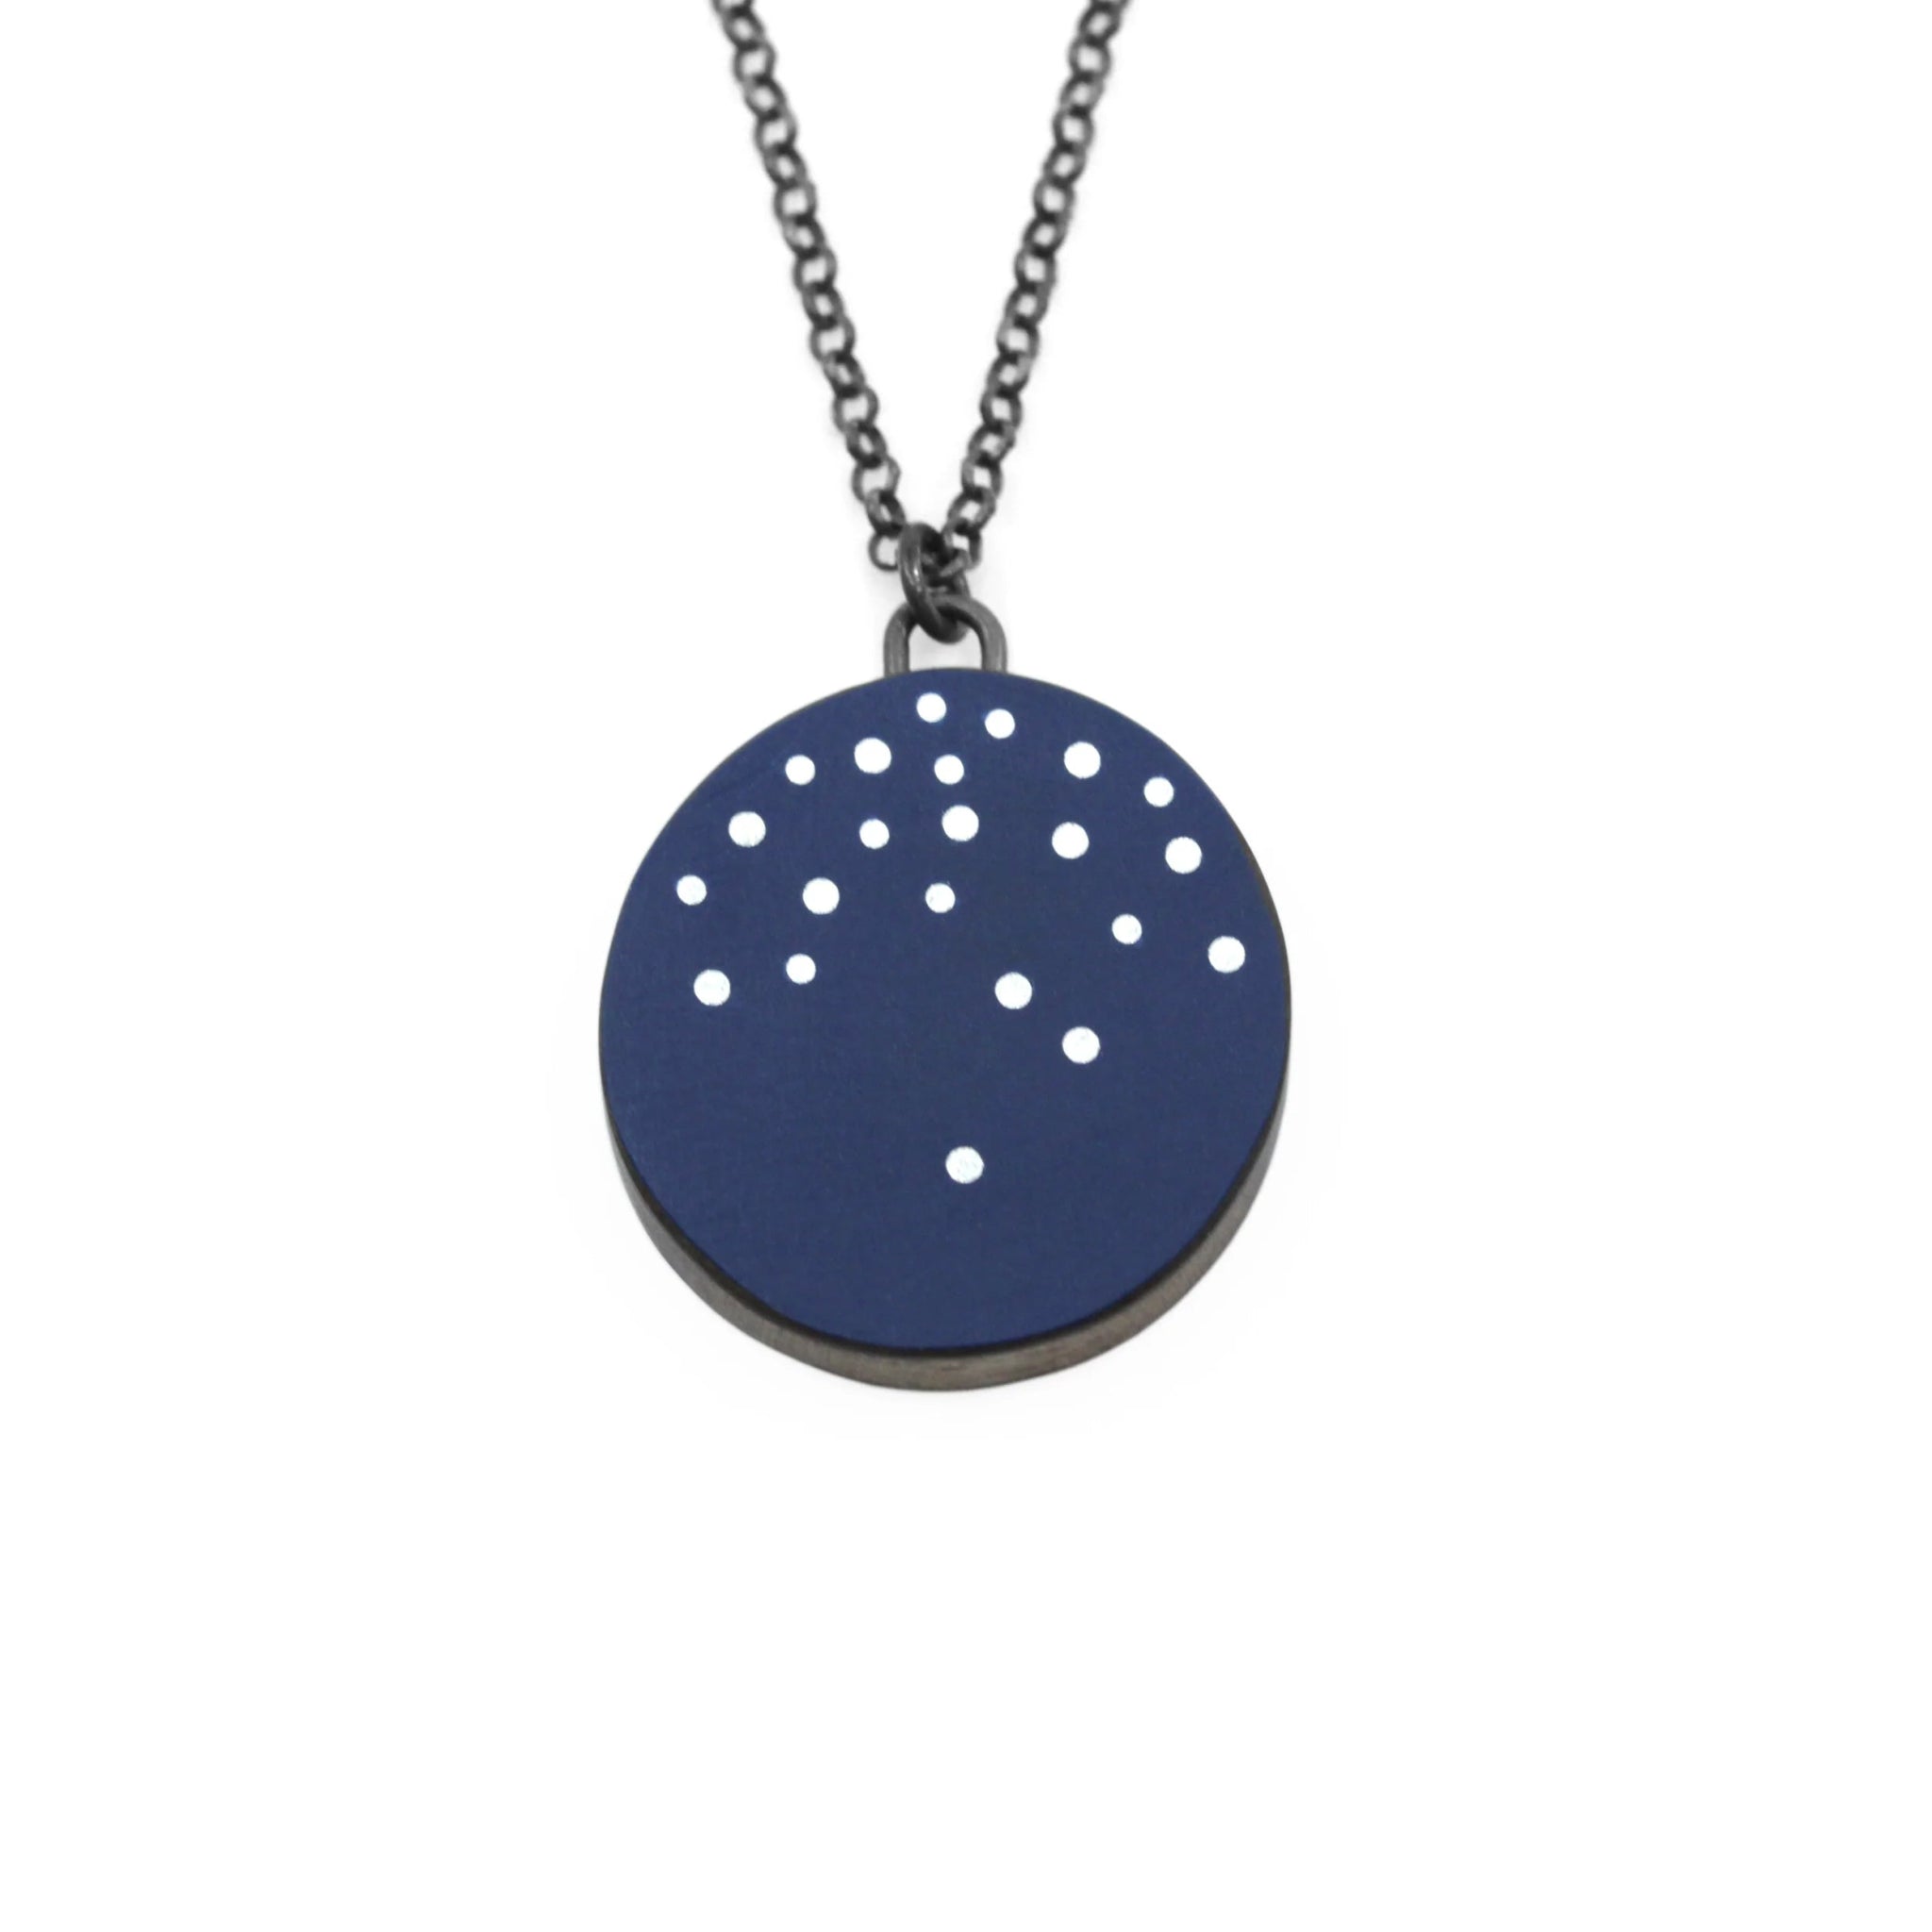 Round Inlaid Dot Pendant Navy - The Nancy Smillie Shop - Art, Jewellery & Designer Gifts Glasgow